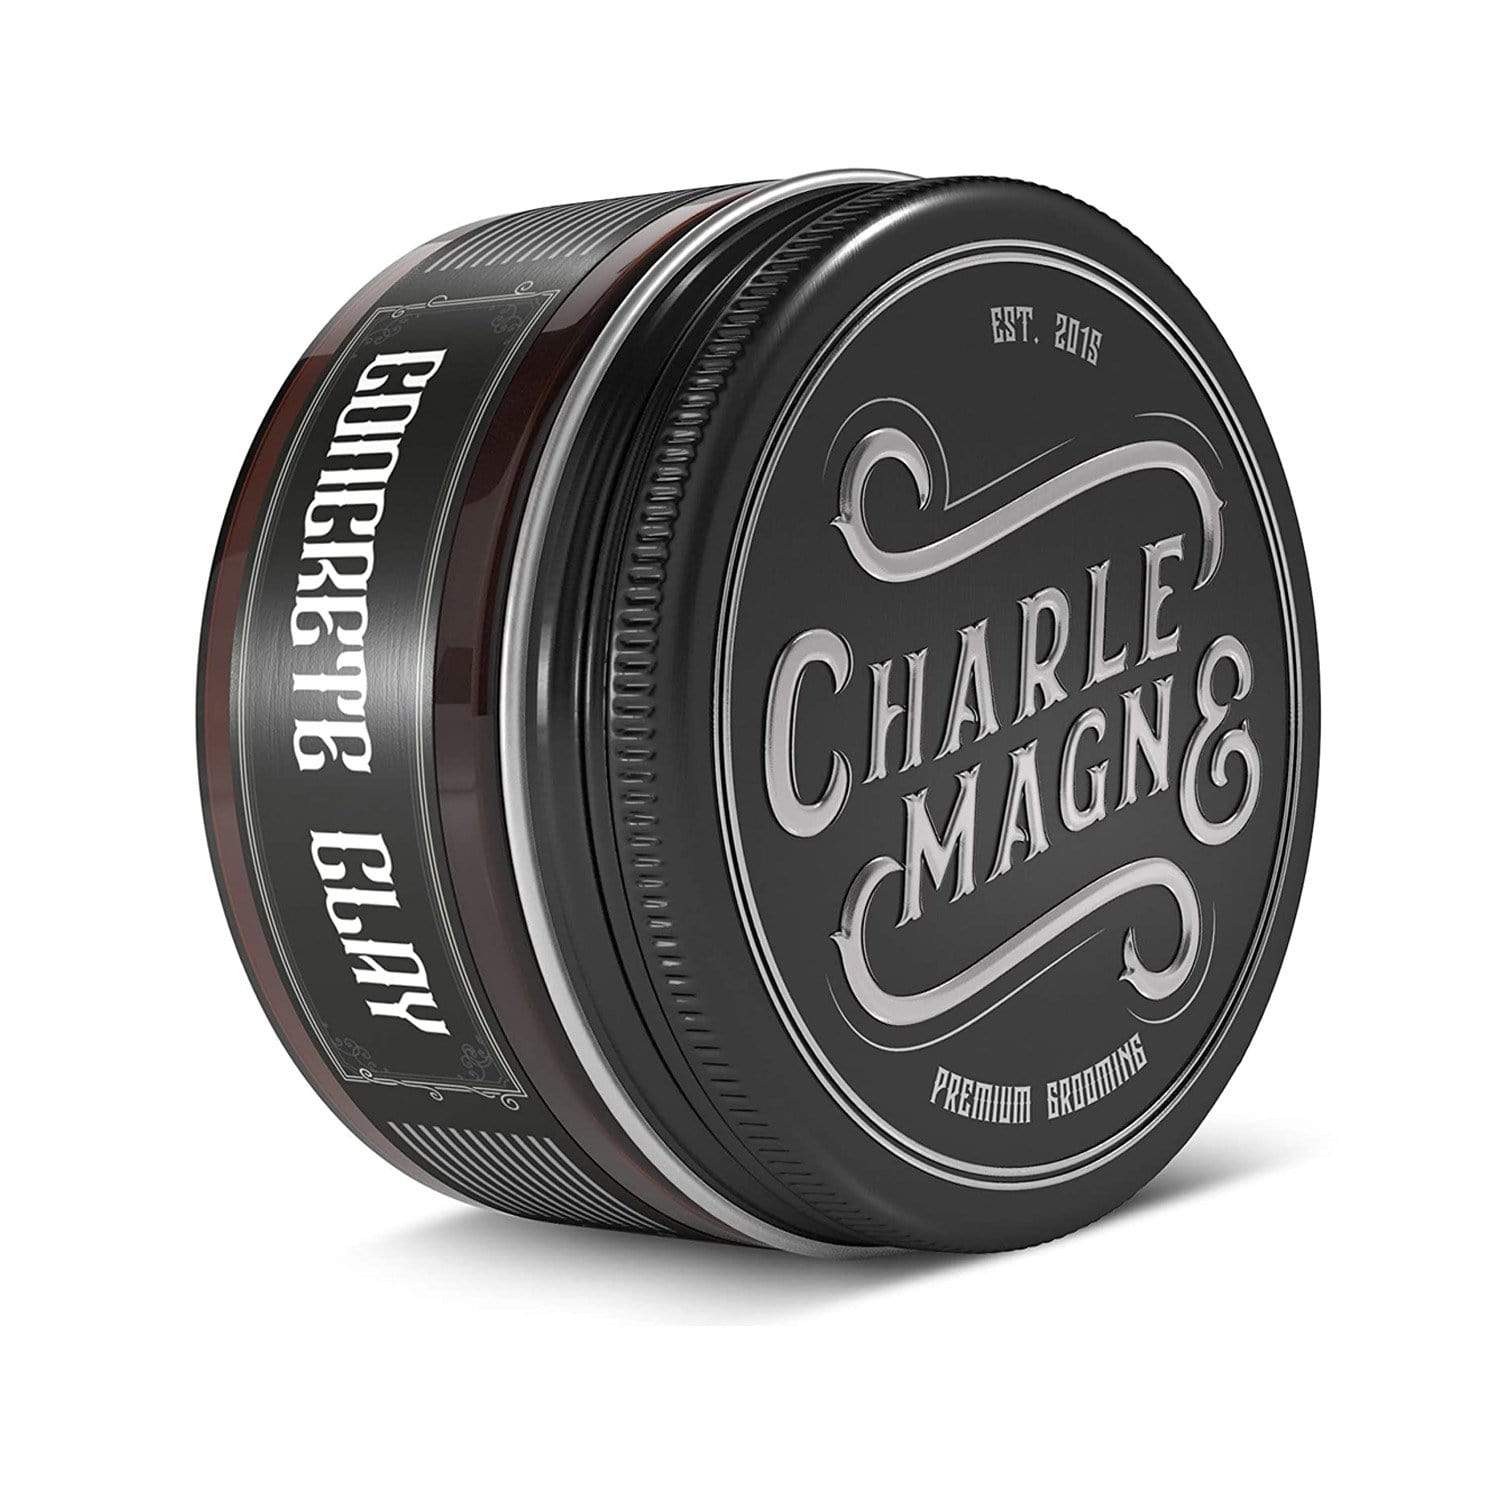 Beardcare Charlemagne • Premium Bundle